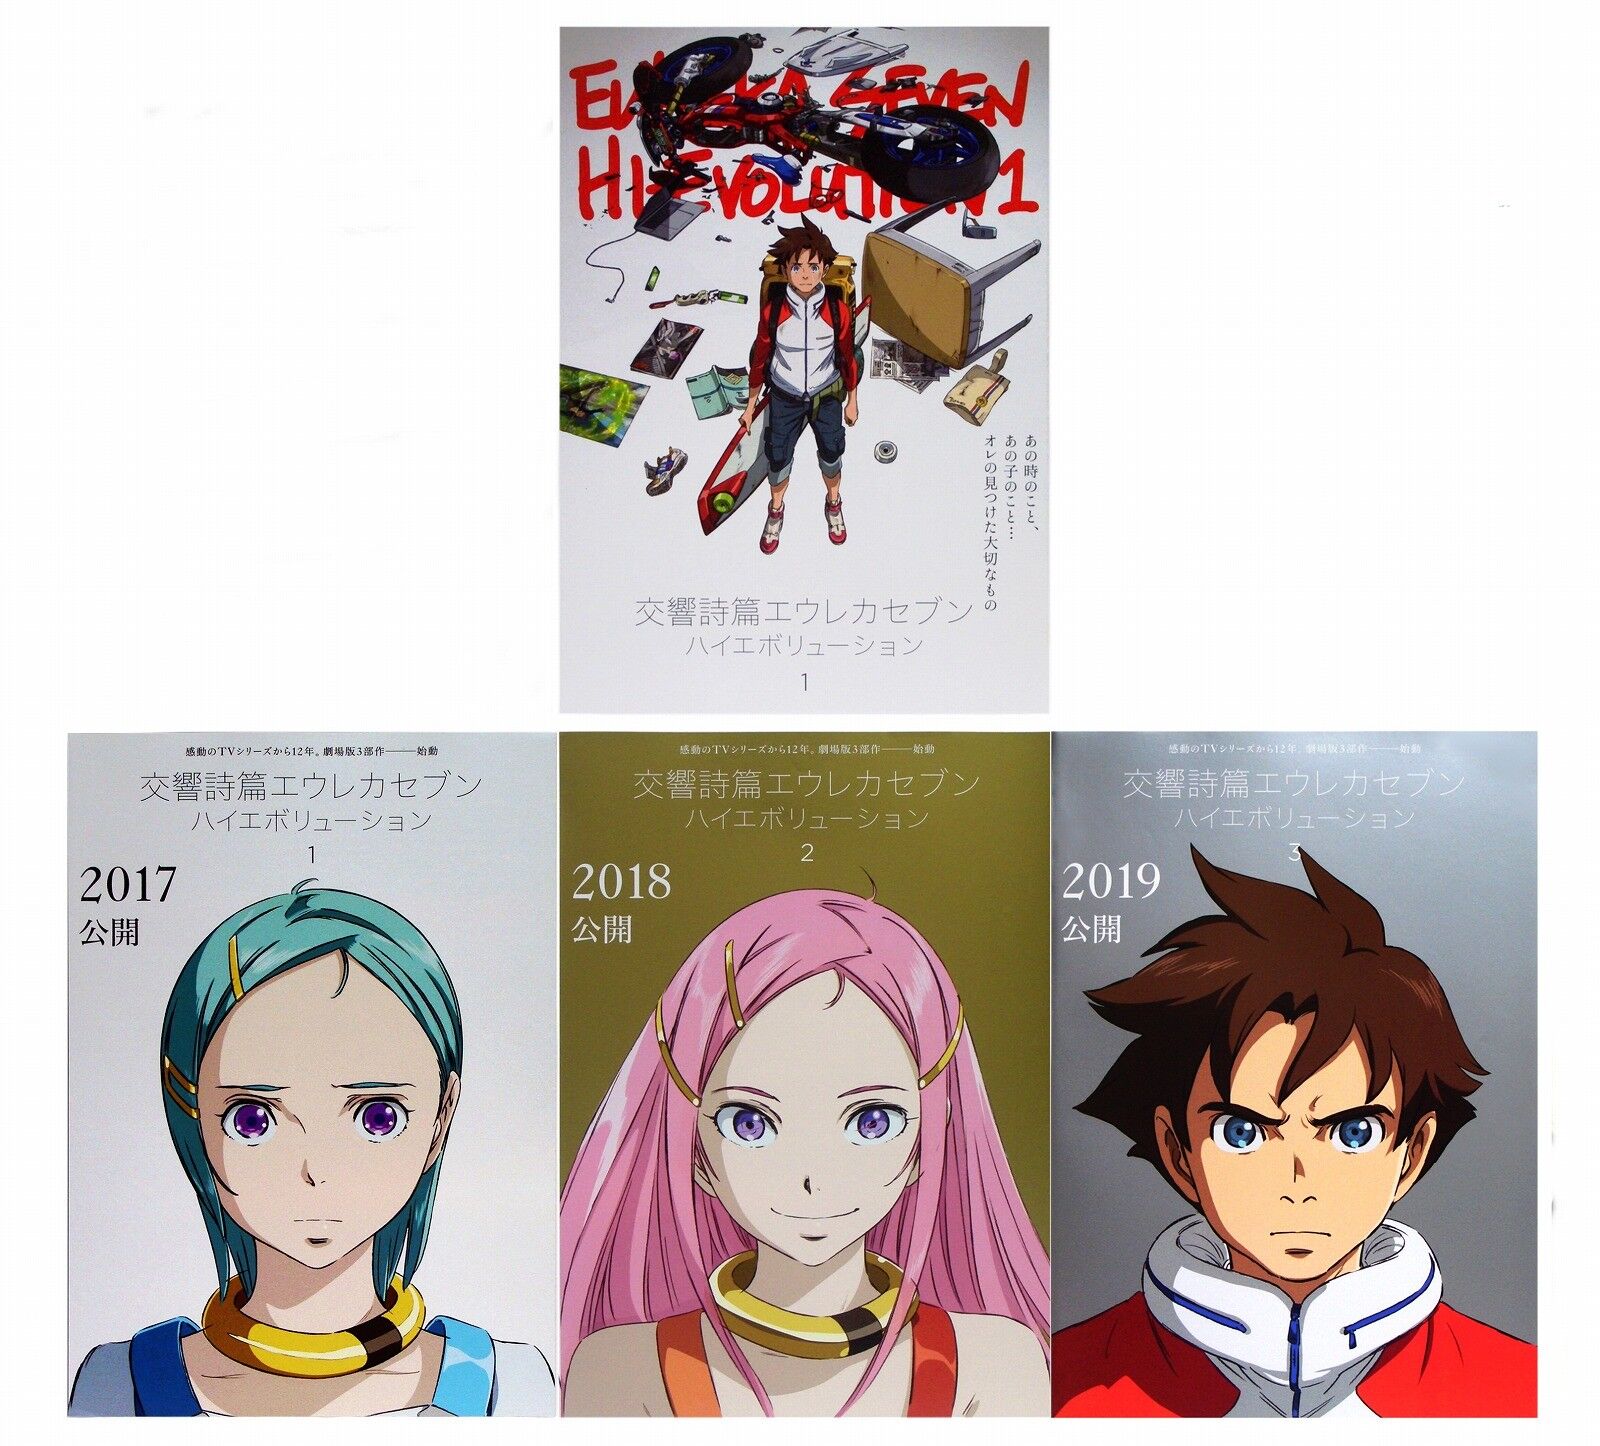 Eureka Seven: Hi-Evolution 1 - Anime Movie 7\'x10\' Mini Poster Set Of 2 Versions 